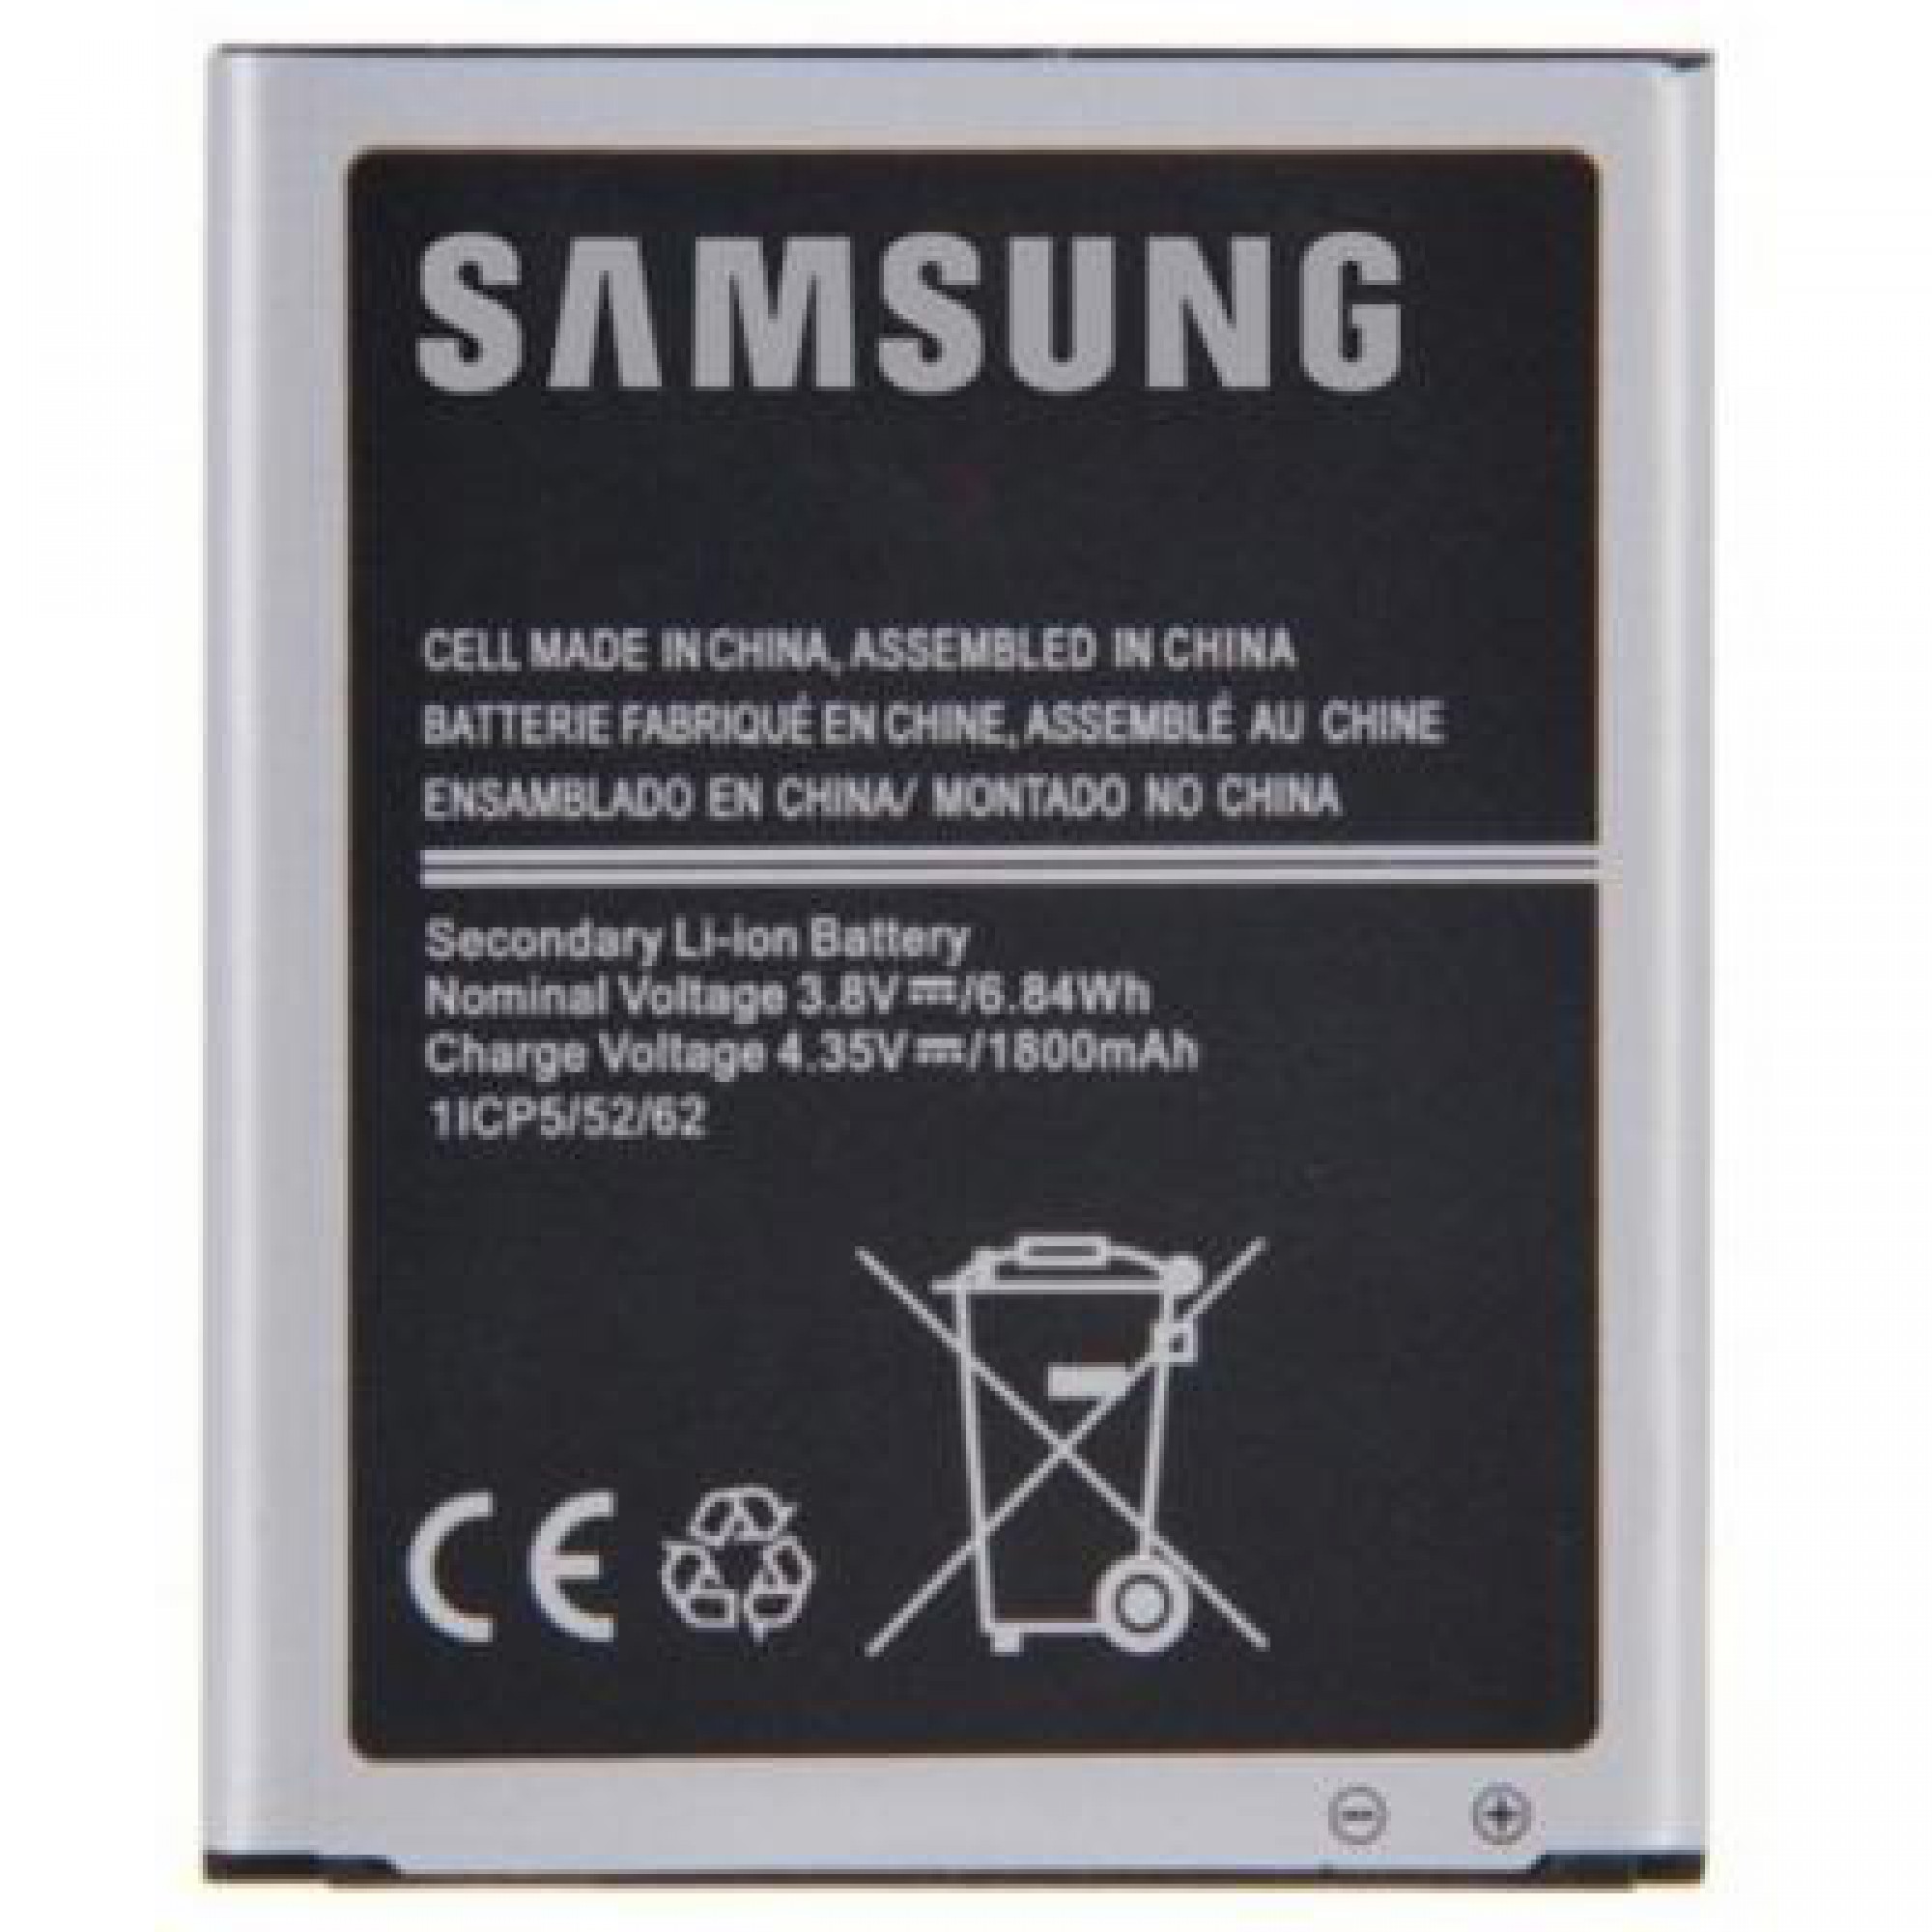 Акумуляторна батарея Samsung for J110 (J1 Ace) (EB-BJ110ABE / 46952)